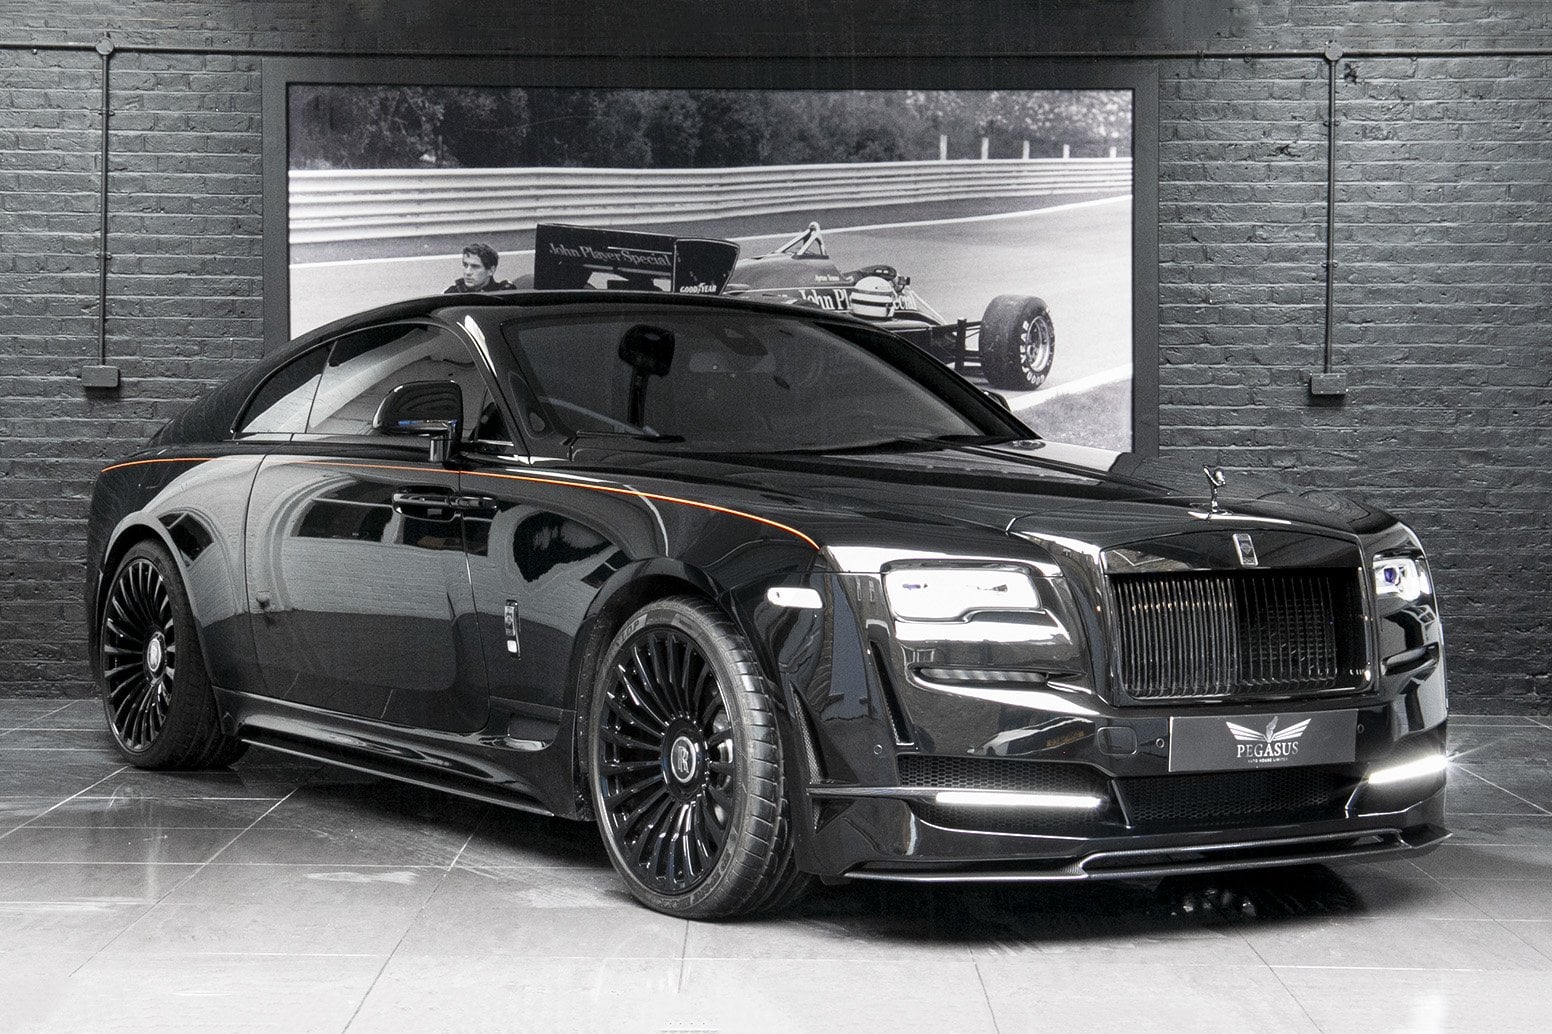 Rolls-Royce Wraith Onyx LHD - Pegasus Auto House.